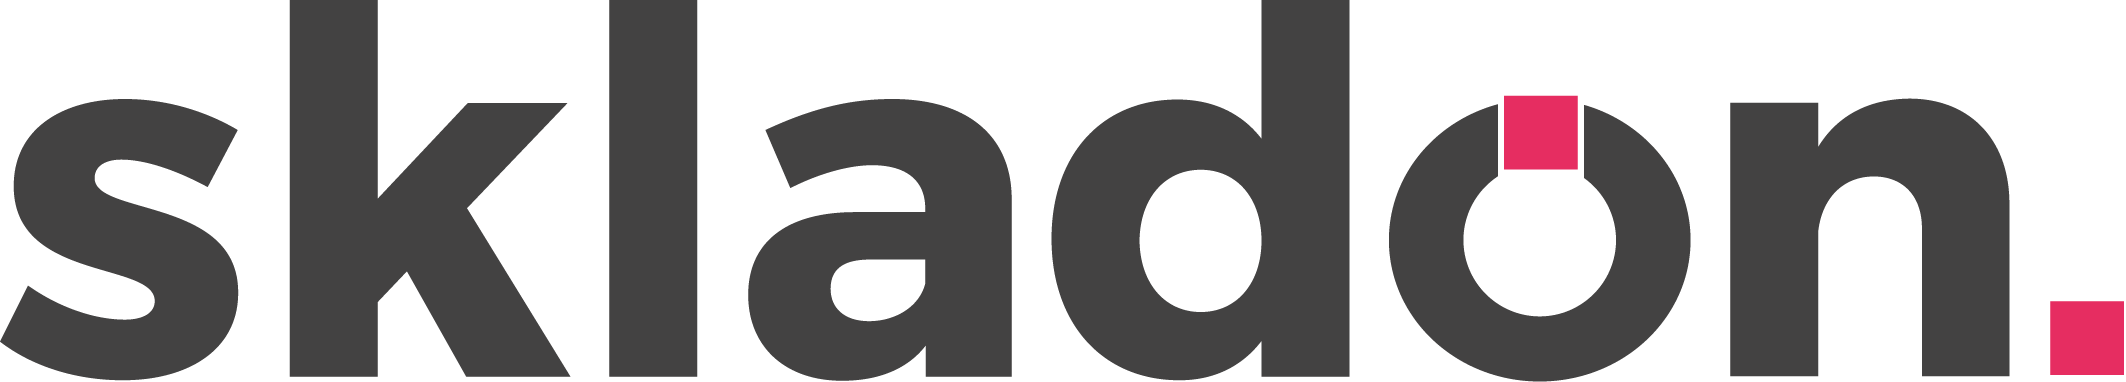 logo_skladon